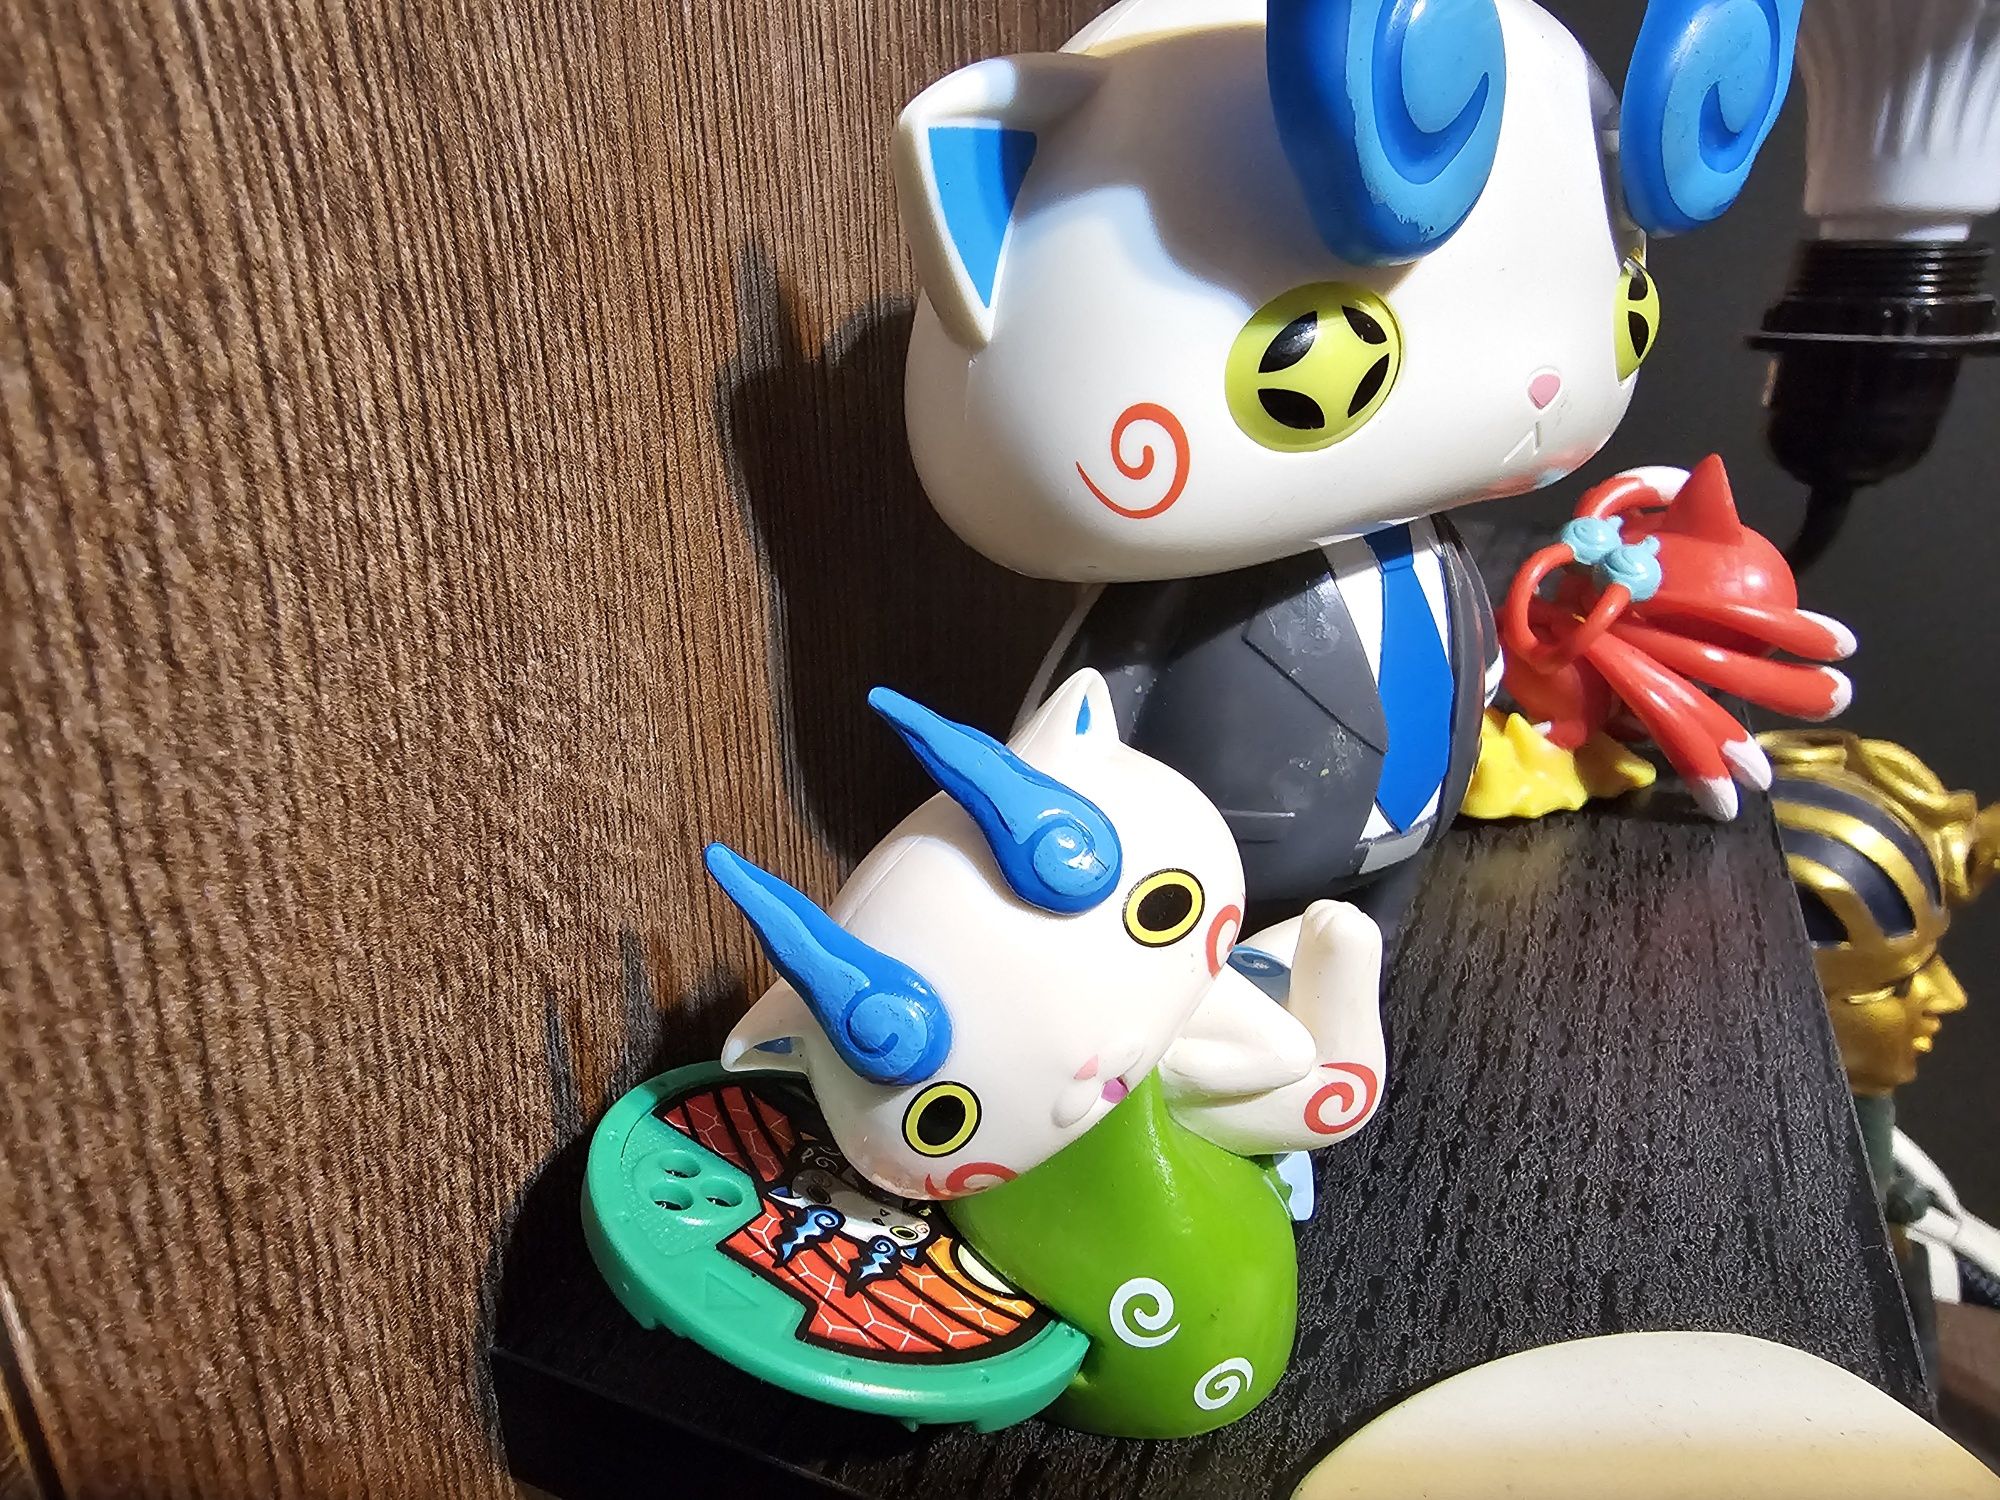 Yo-kai watch figurine